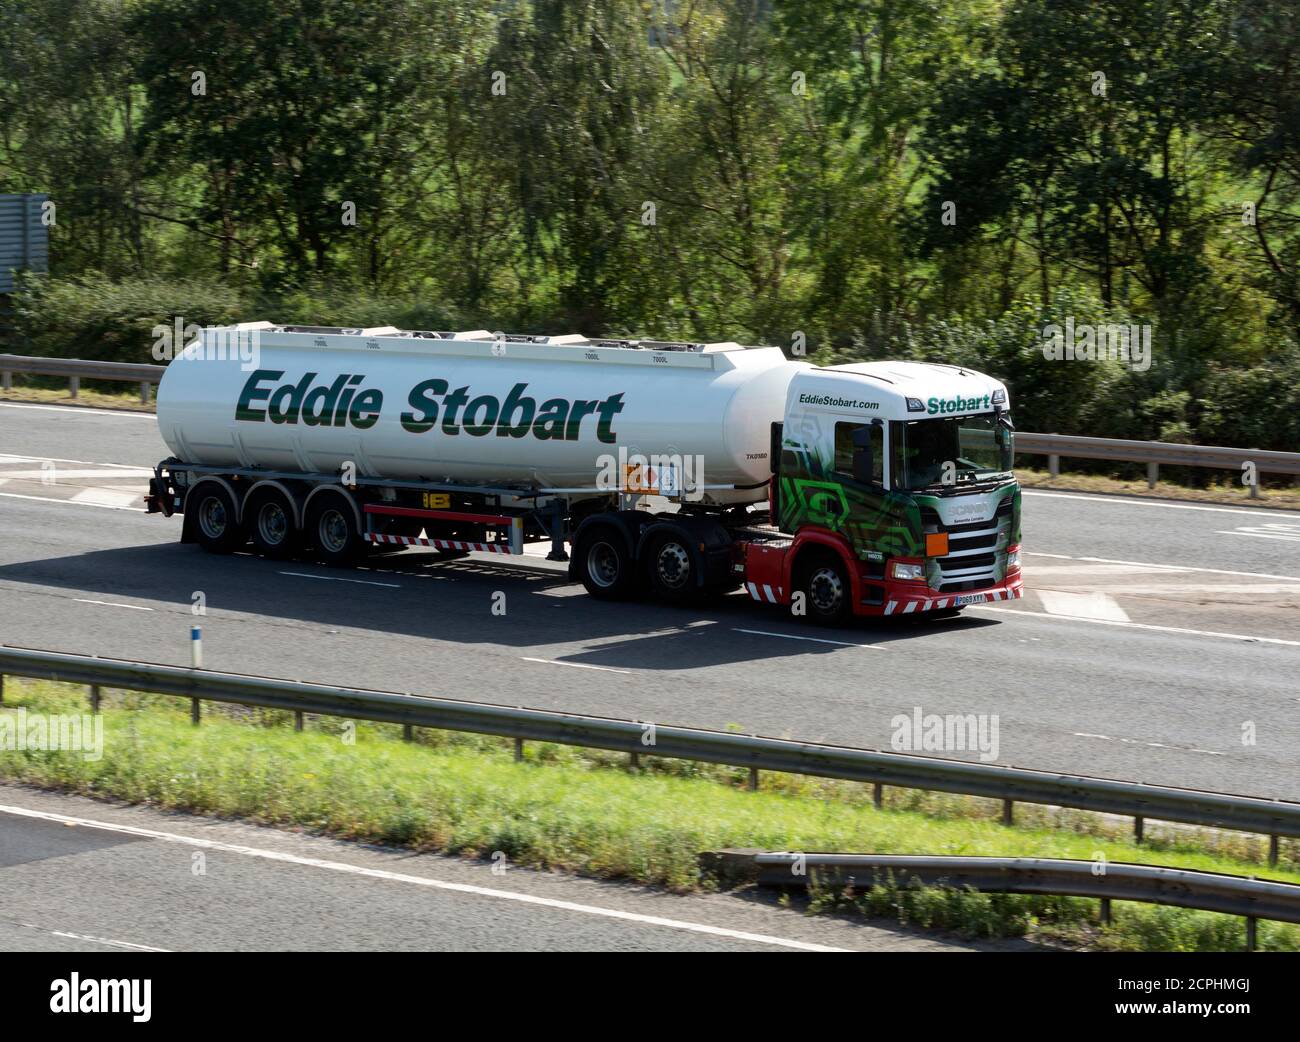 Eddie Stobart tanker lorry on the M40 motorway, Warwickshire, UK Stock Photo